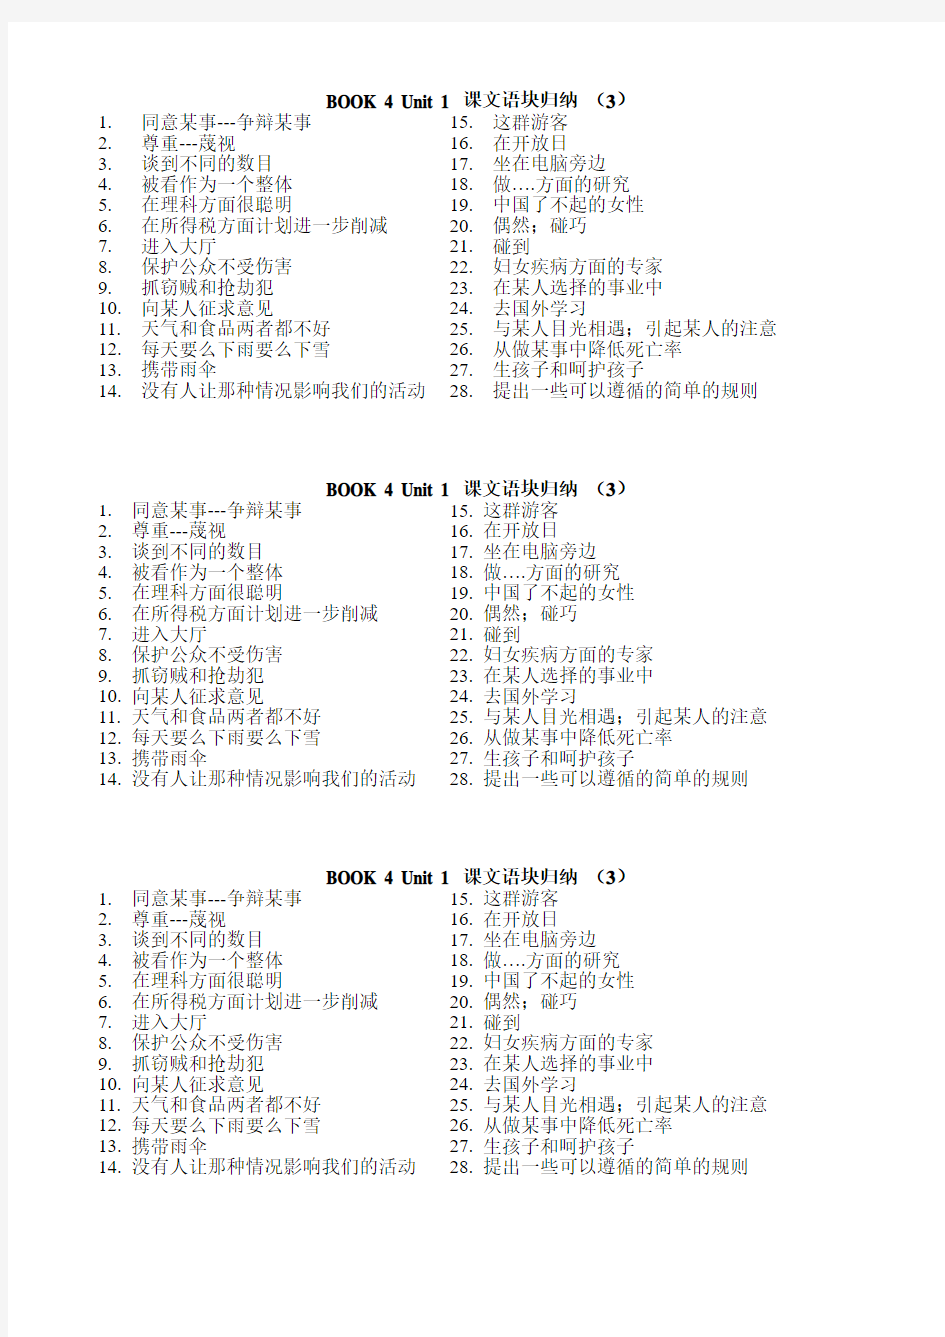 BOOK 4 Unit 1 课文中语块归纳 (3 汉语)